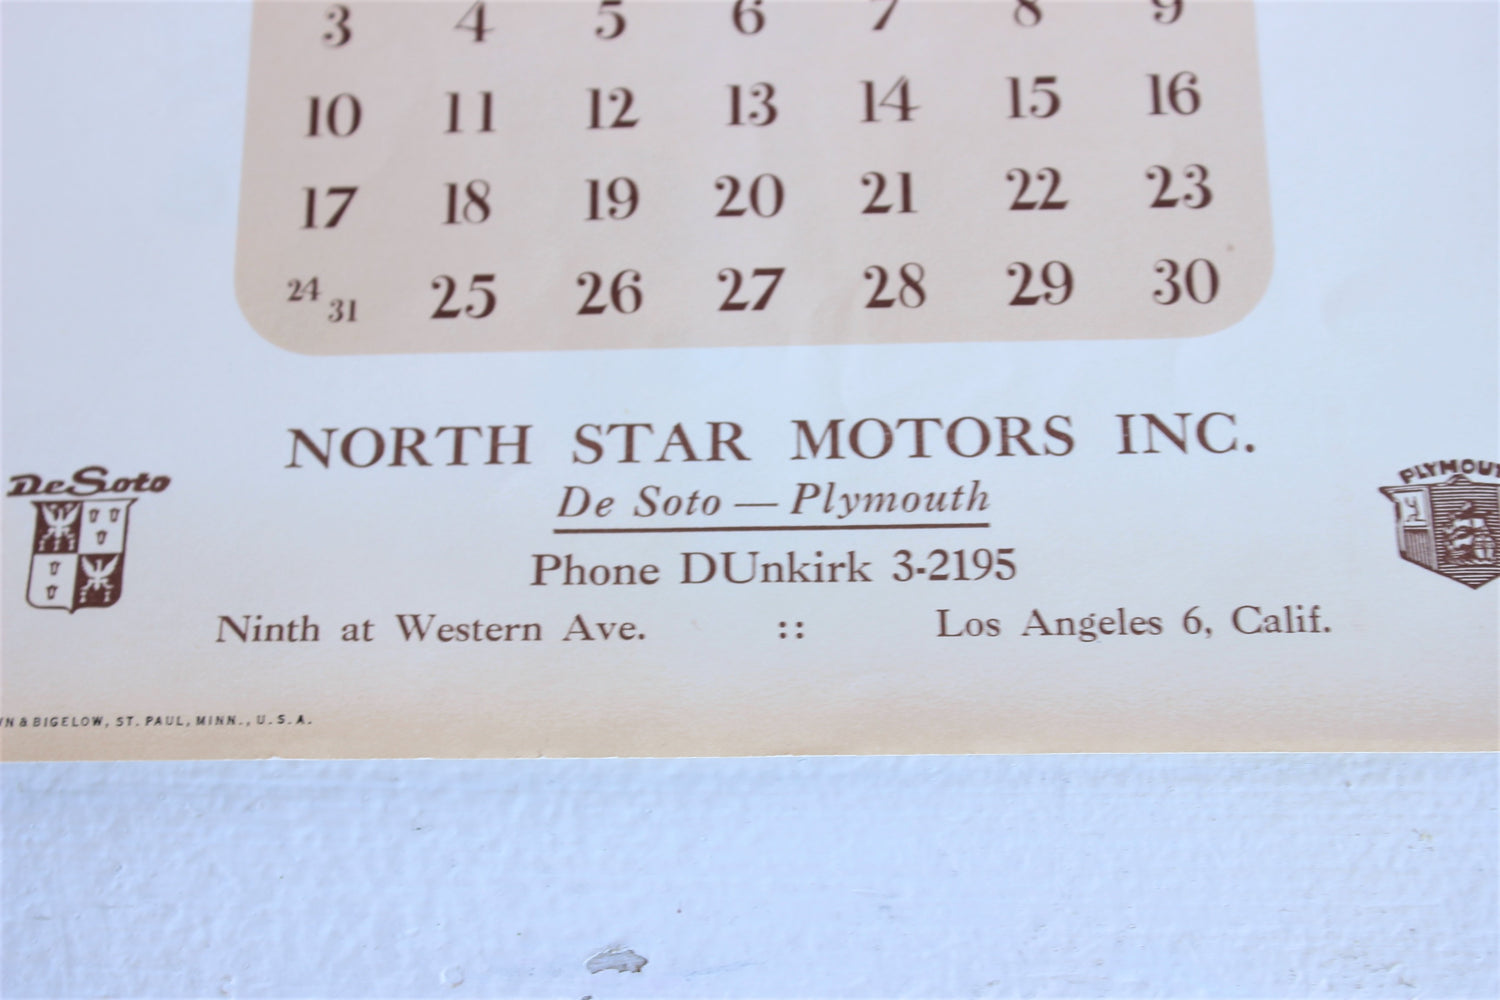 Vintage 1950s Calendar, 1954 North Star Motors Promotional Souvenir with Flowers